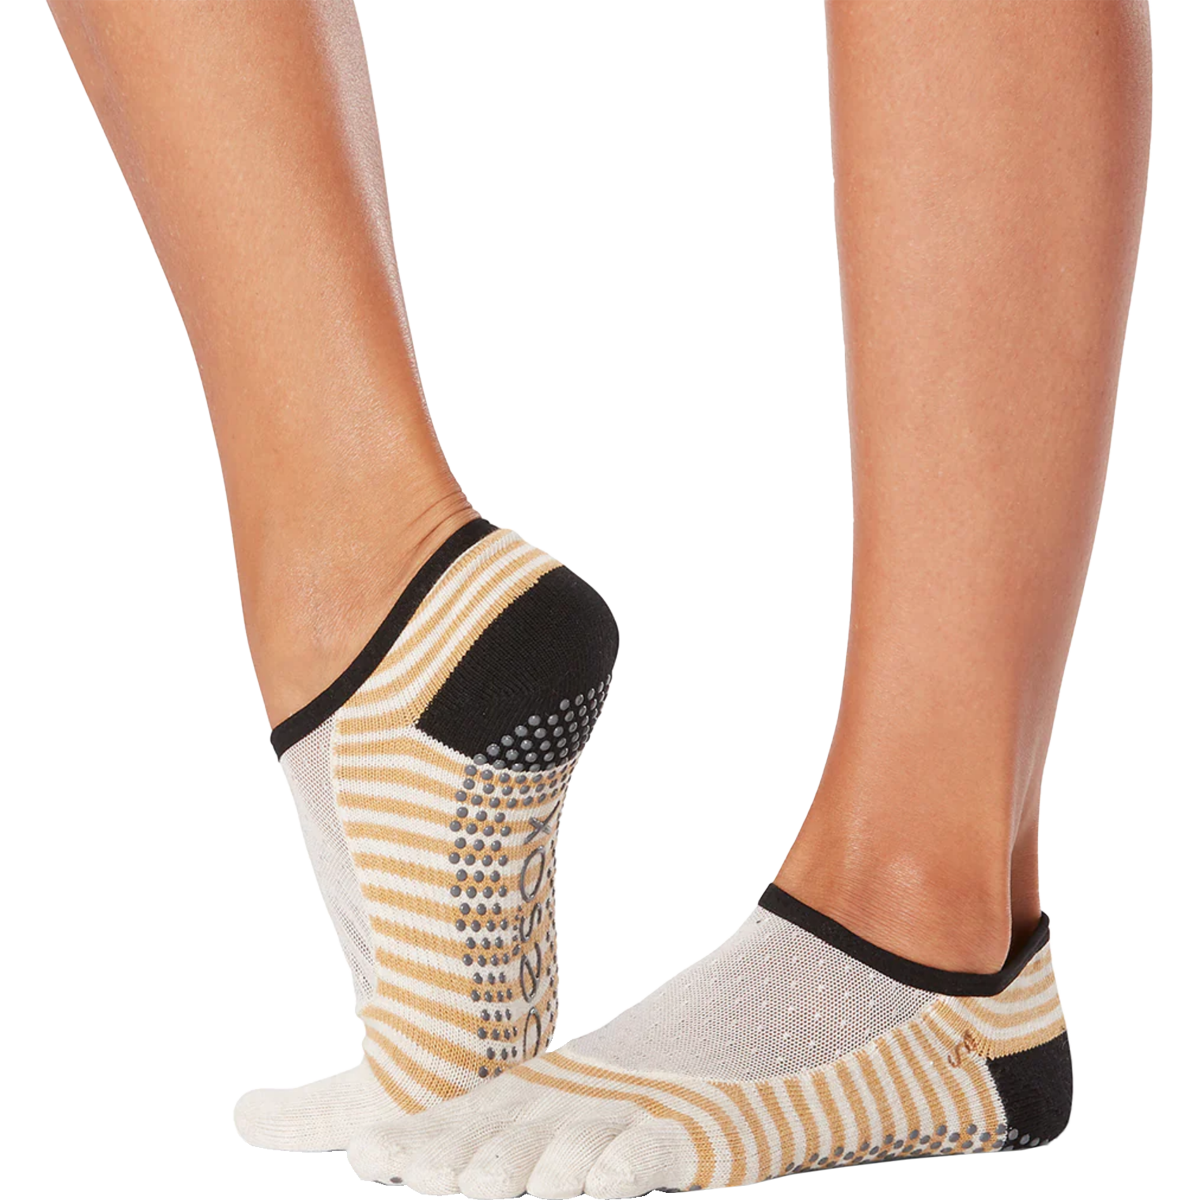 Toesox Women's Bellarina Half Toe Grip Mary Jane Yoga Socks 